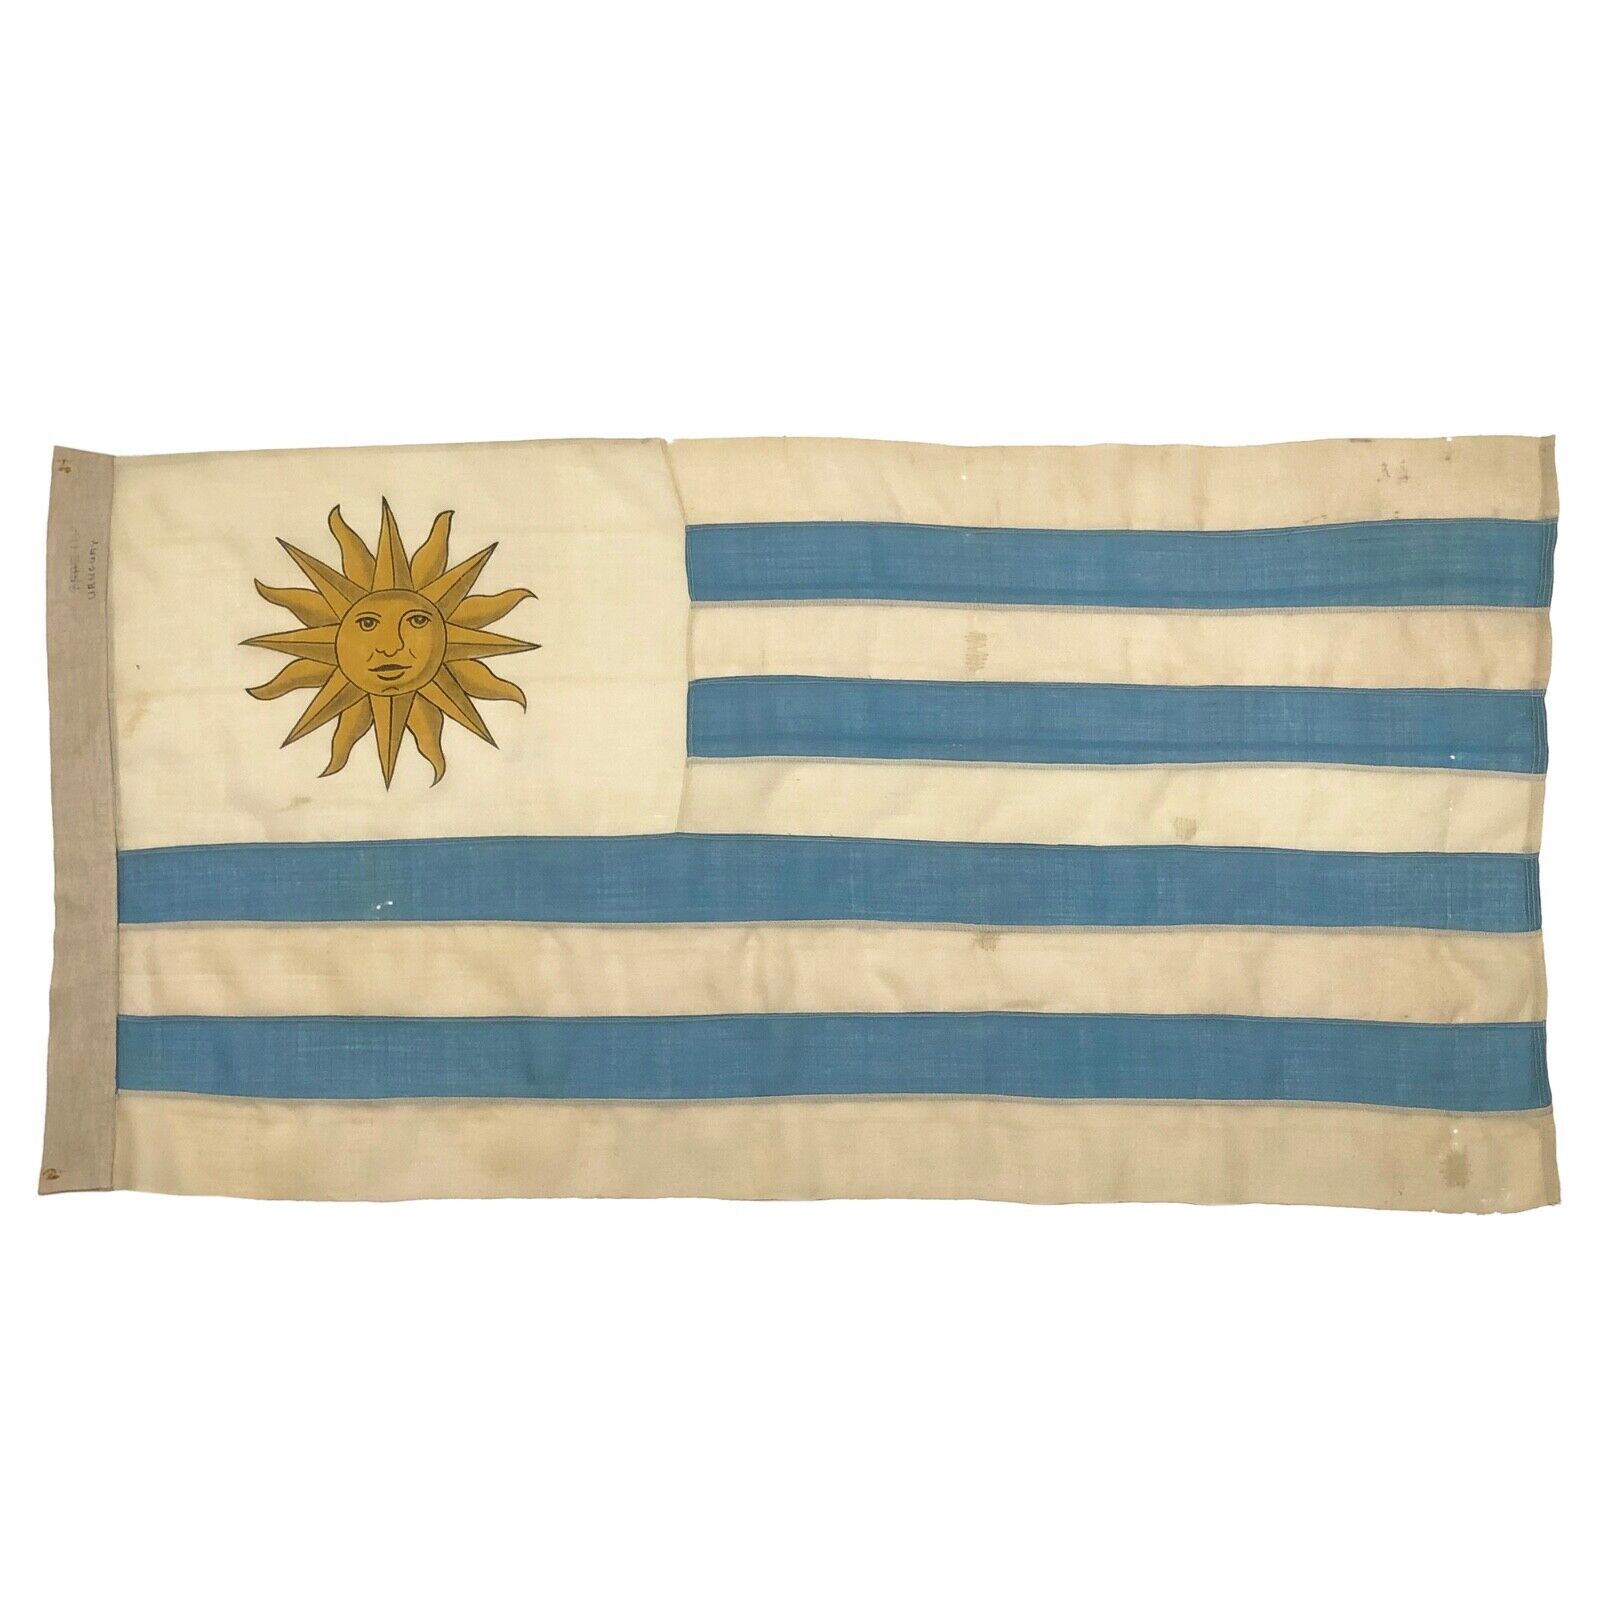 Vintage Sewn Wool Uruguay Flag Old Sun May World Cloth Textile Antique Art Decor